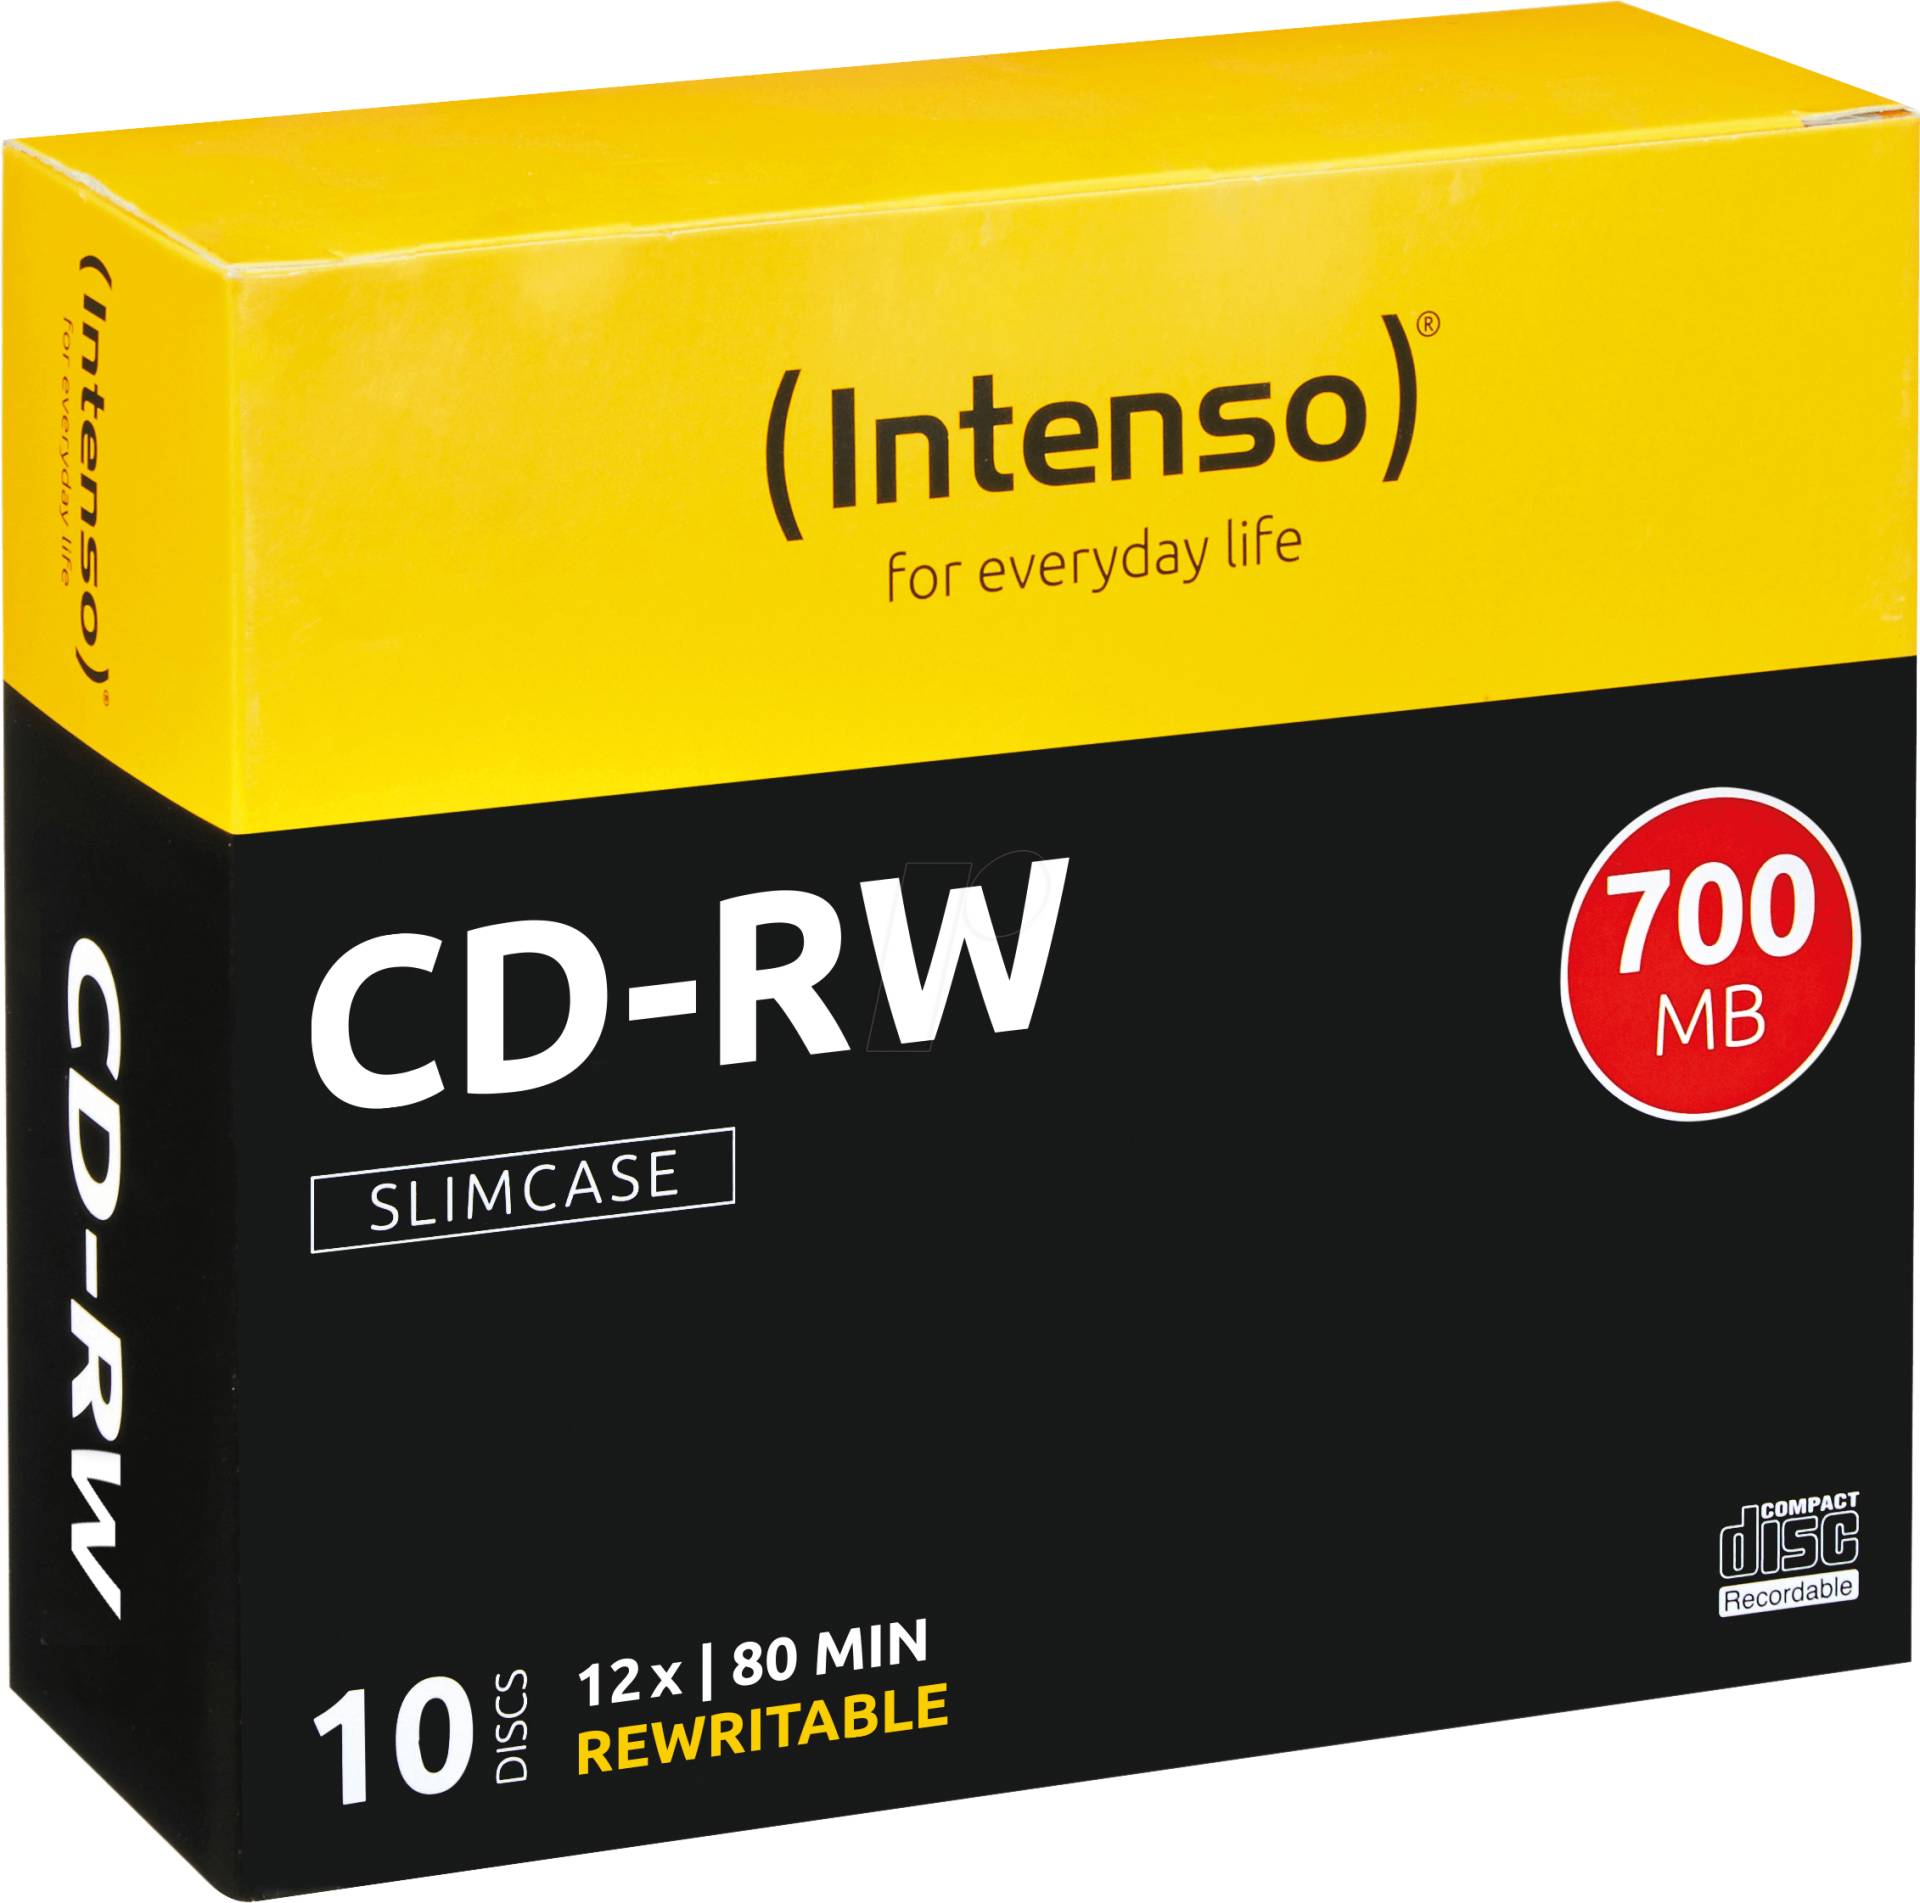 CD-RW 8010 INT-S - CD-RW 700MB/80min, 10er Slim Case von Intenso